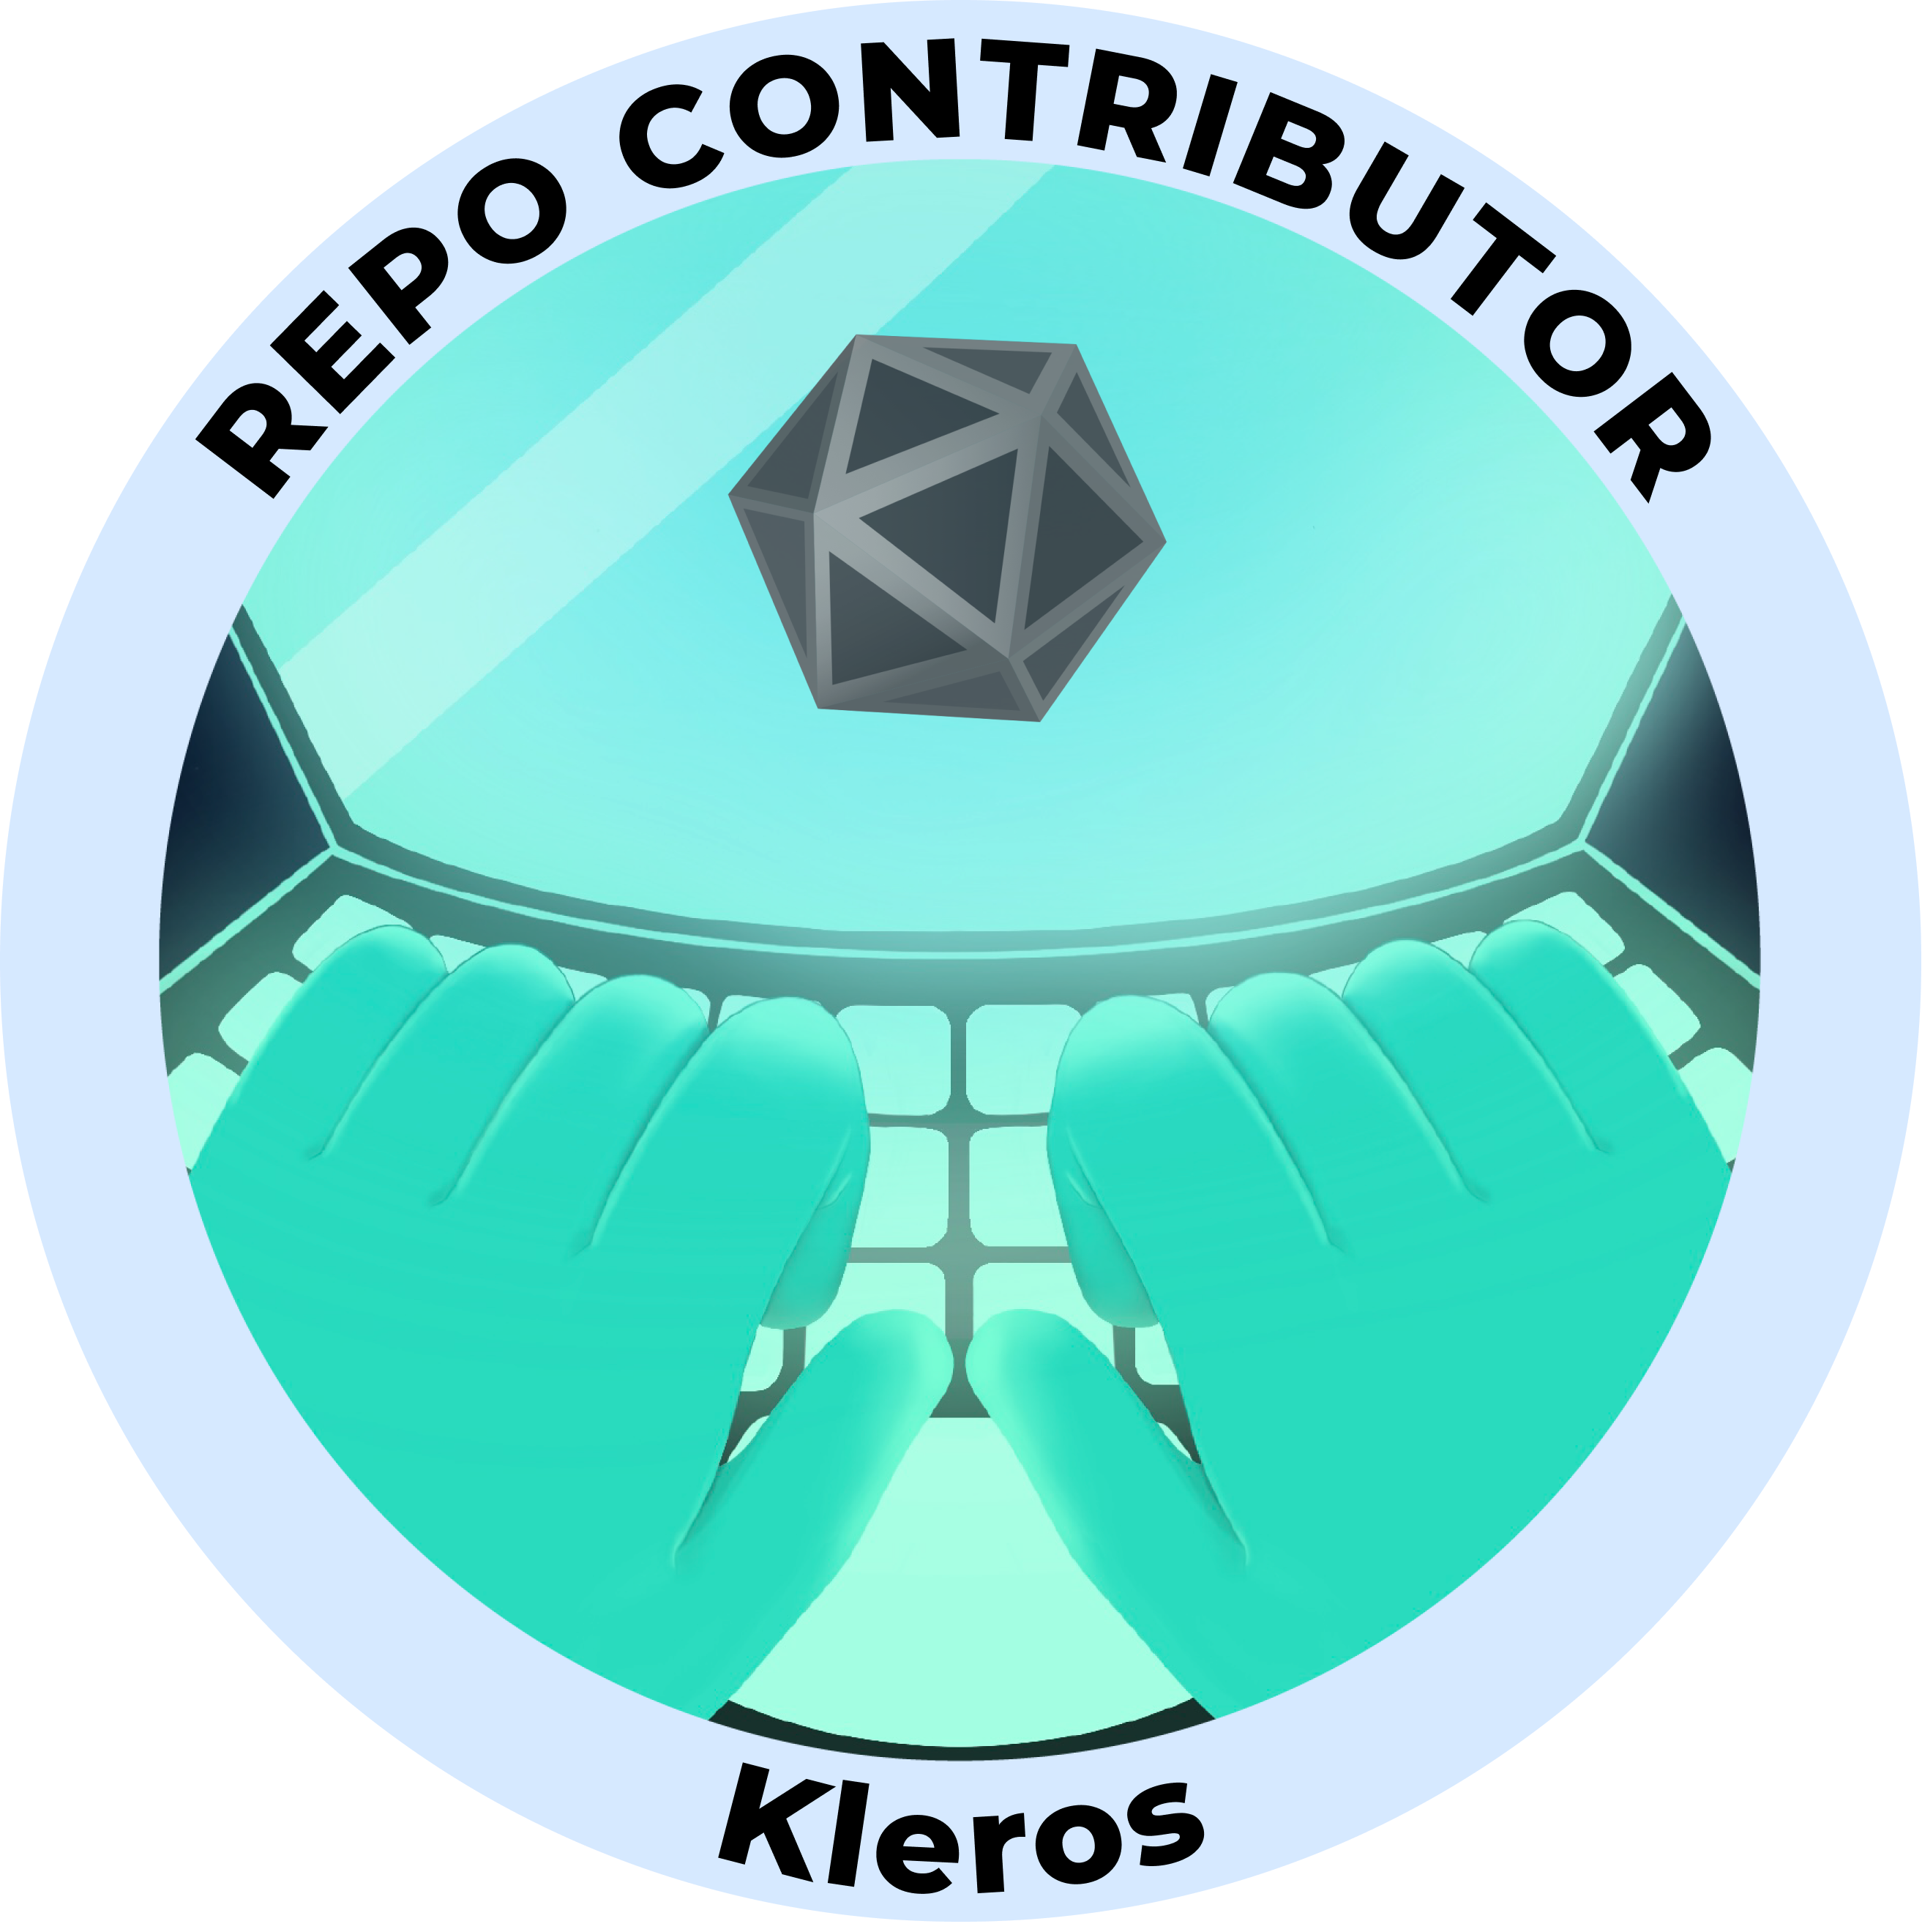 Web3 Badge | Project Contributor: Kleros